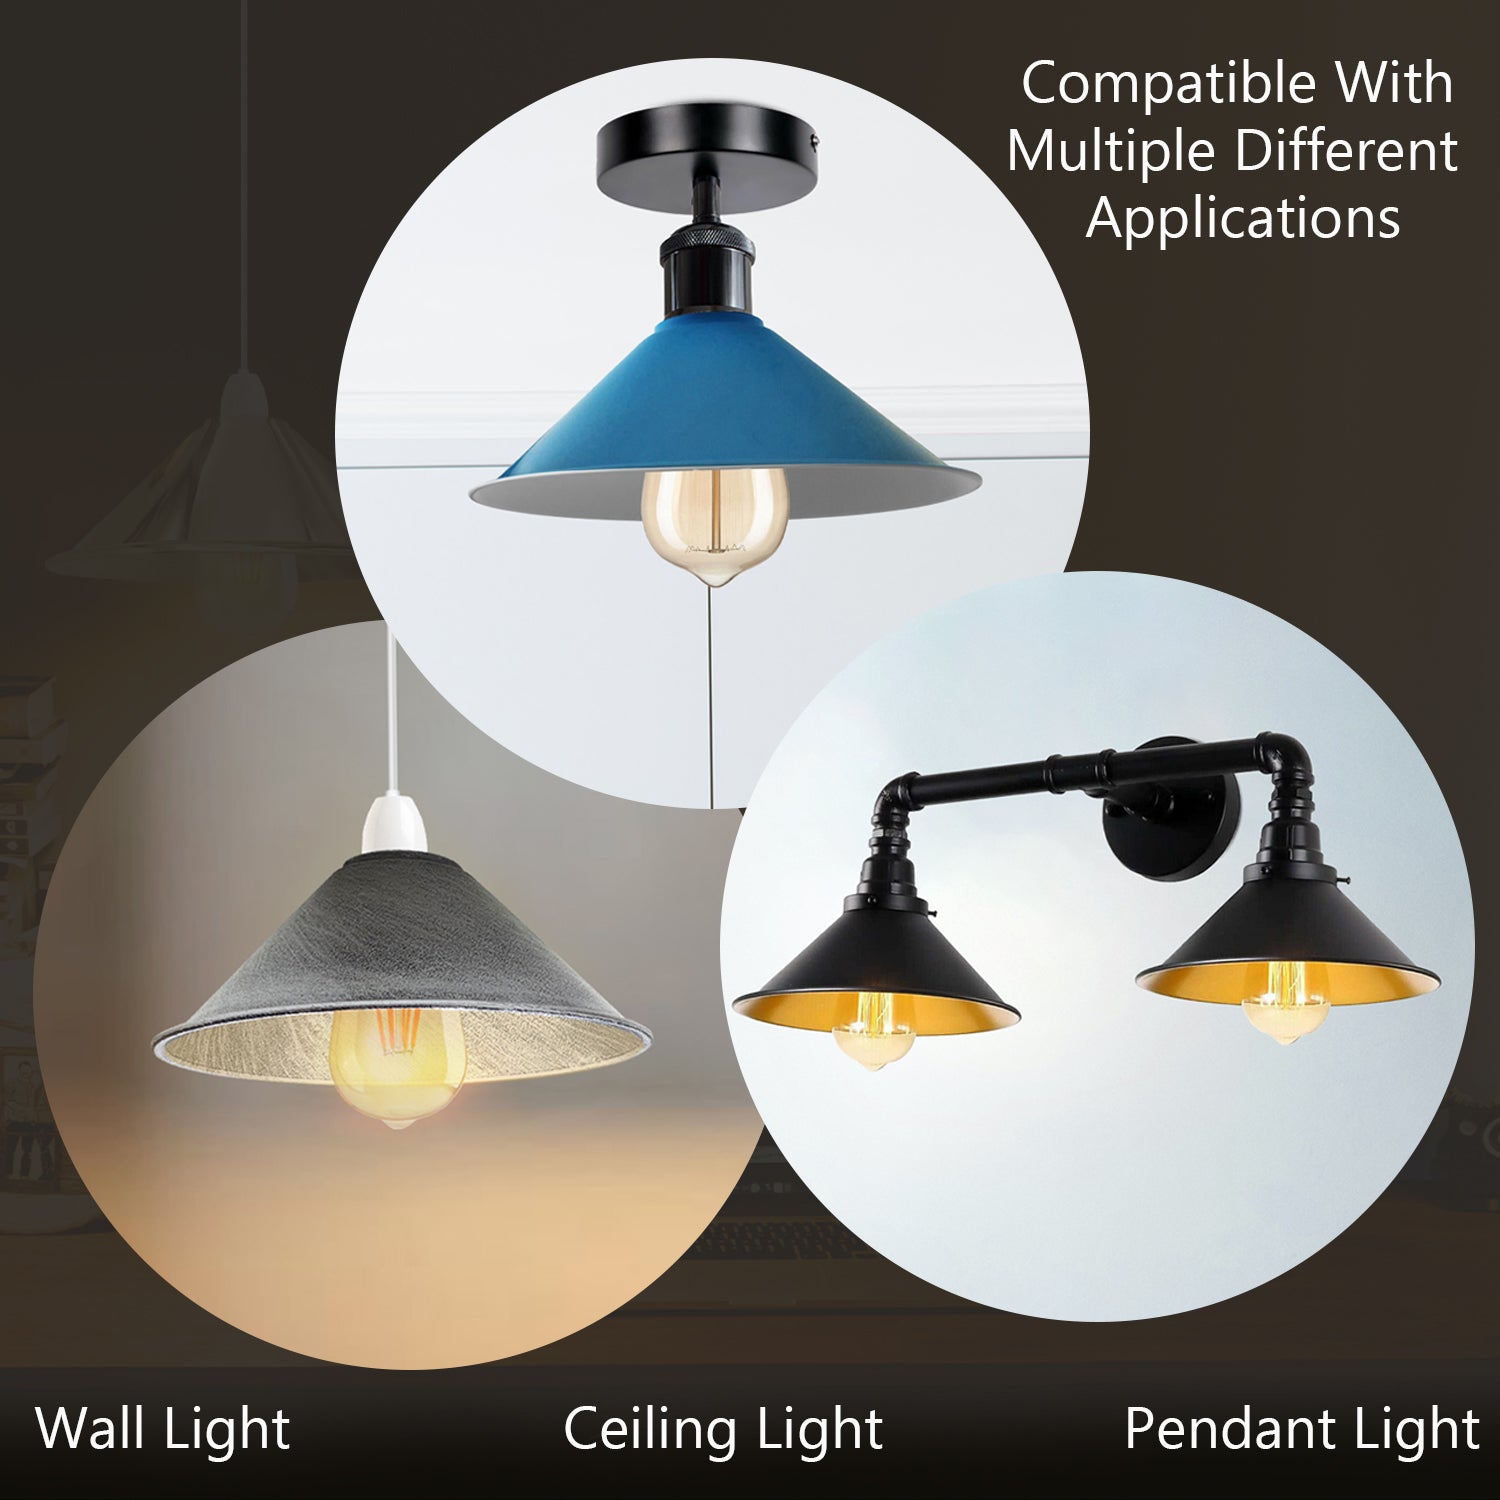 Cone shape lamp shades - Application image